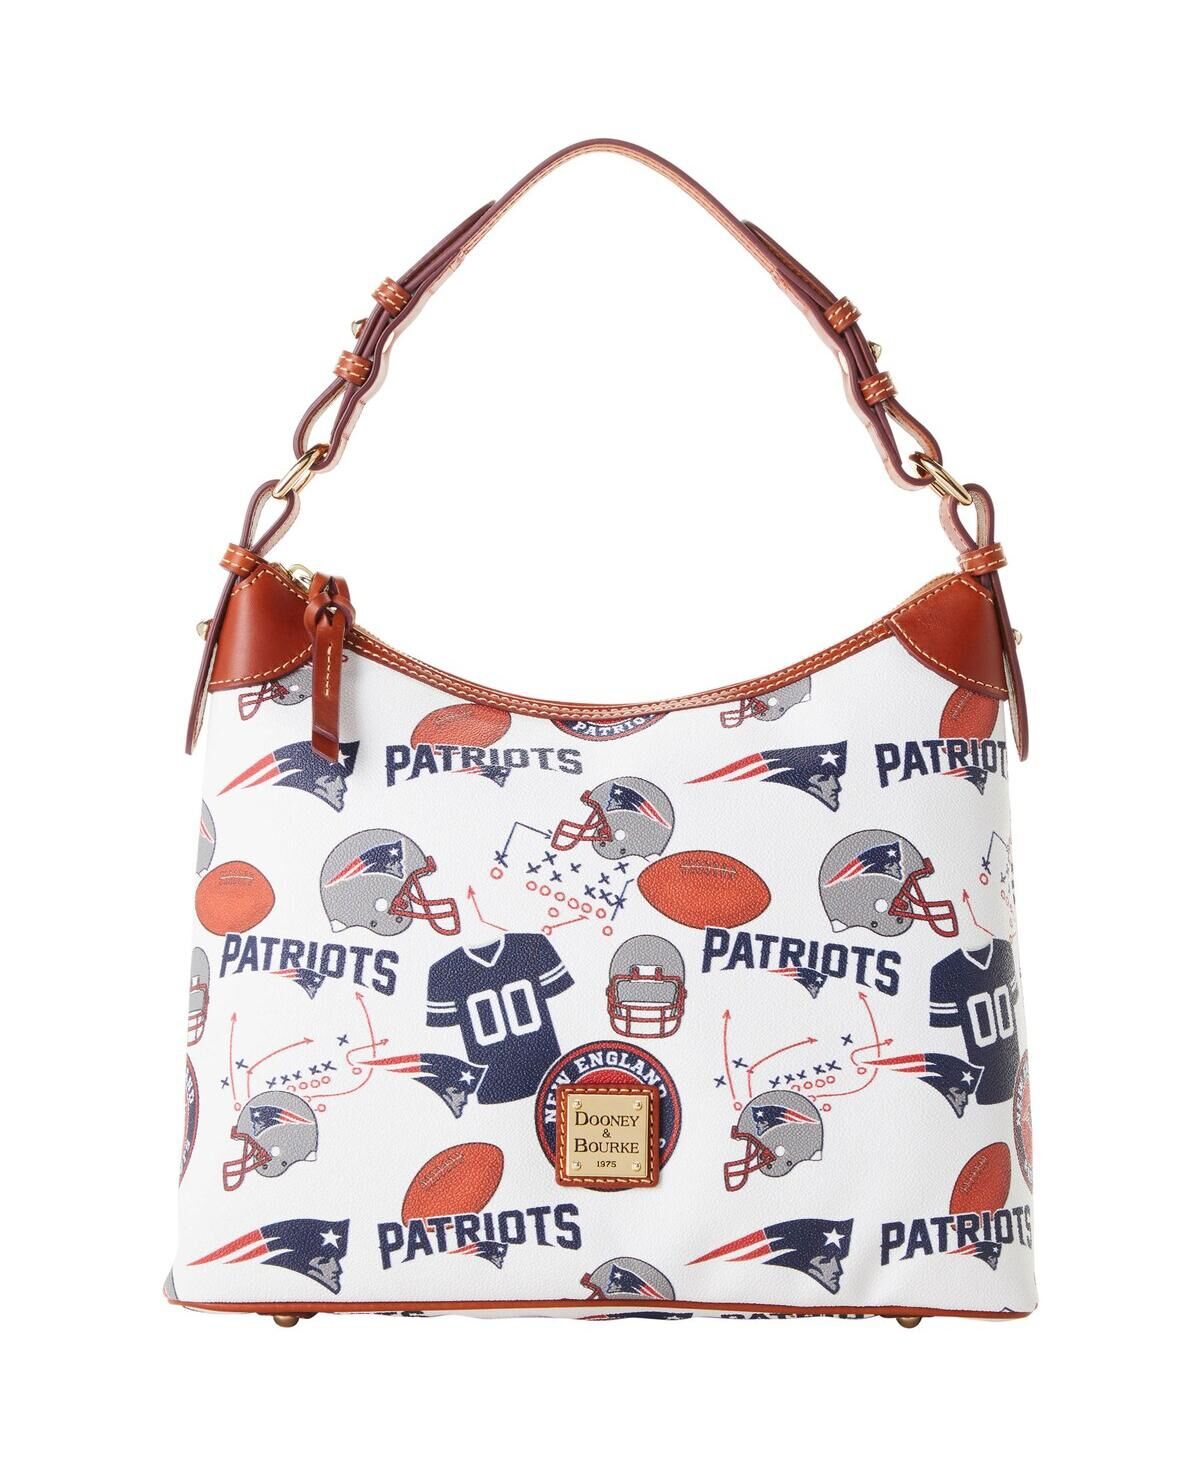 Dooney & Bourke Women's Dooney & Bourke New England Patriots Game Day Hobo Handbag - White Multi